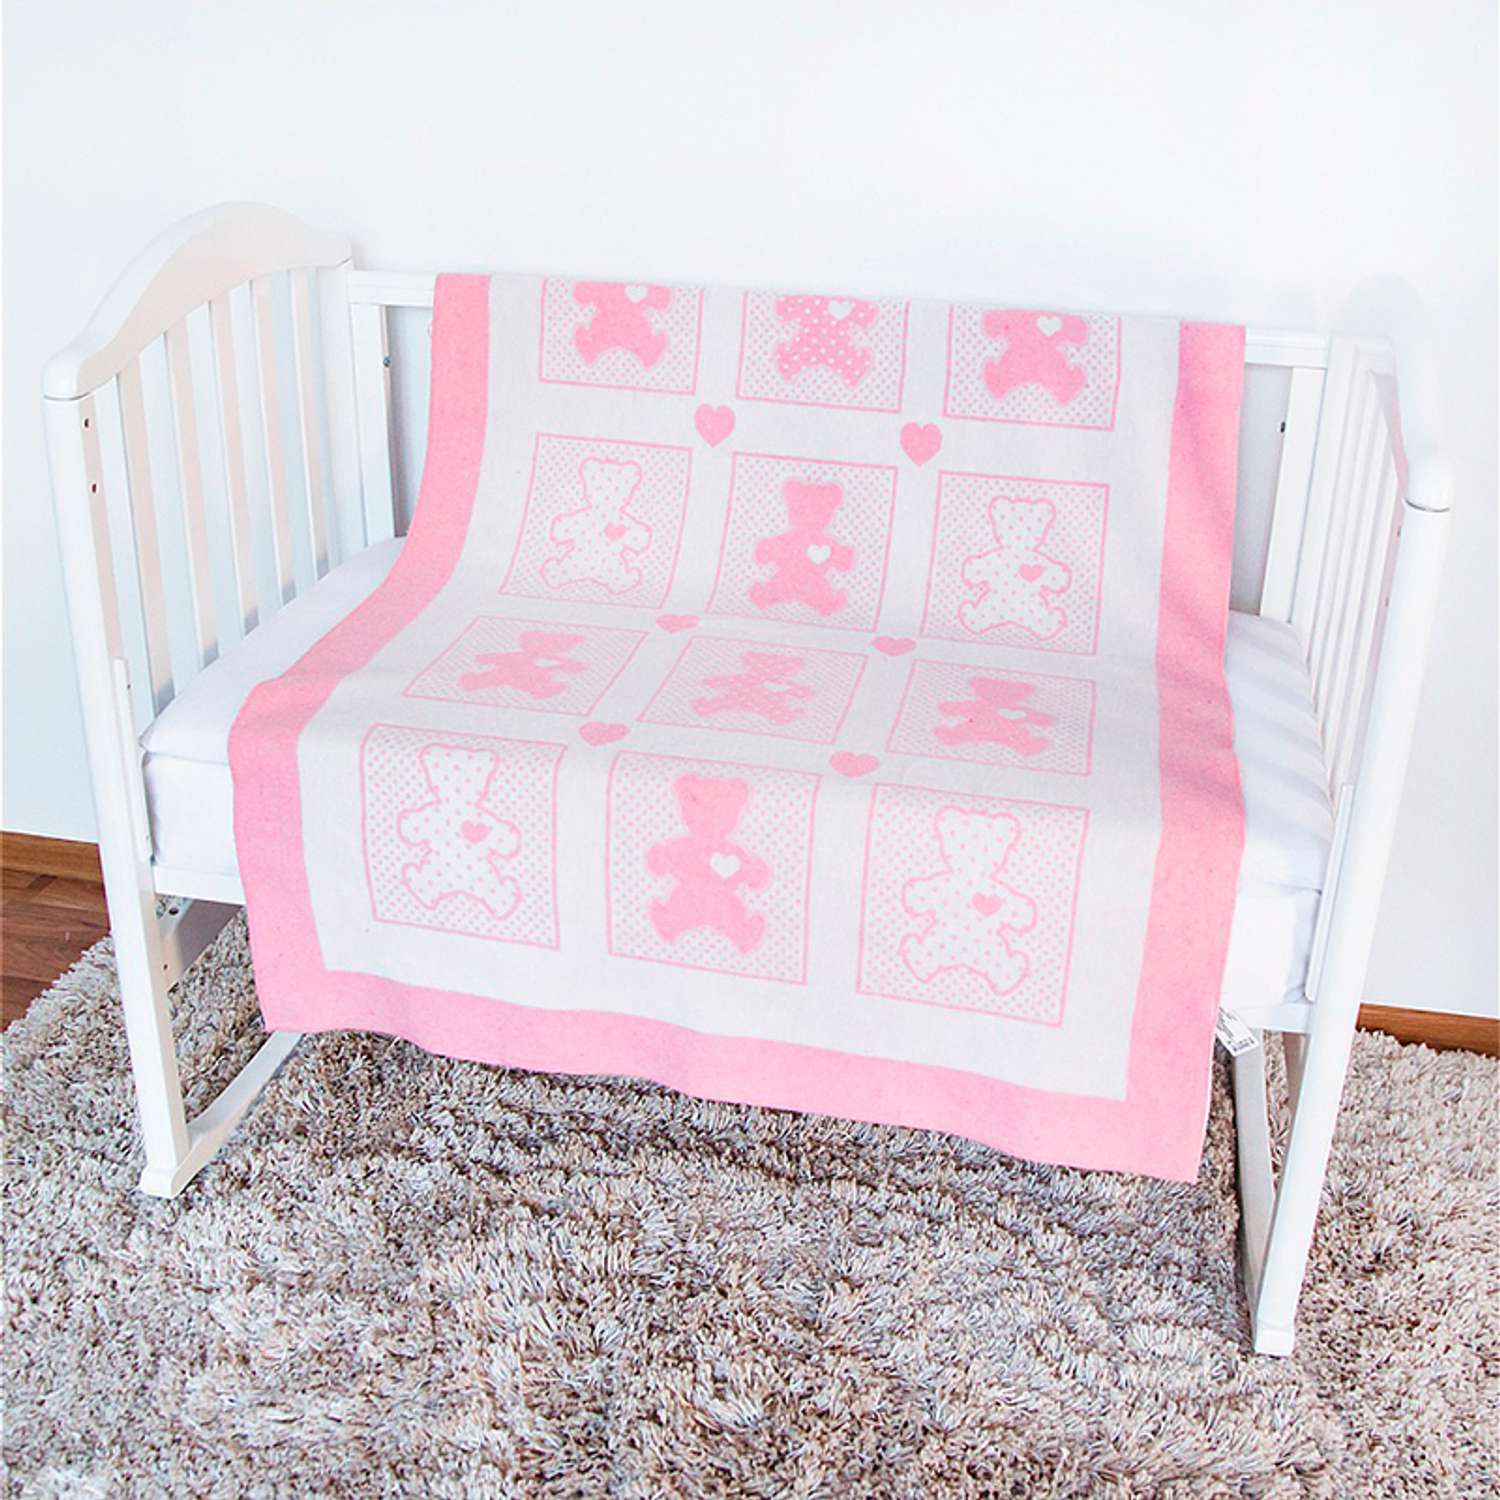 Одеяло байковое Споки Ноки жаккард 100х140 розовый - фото 2